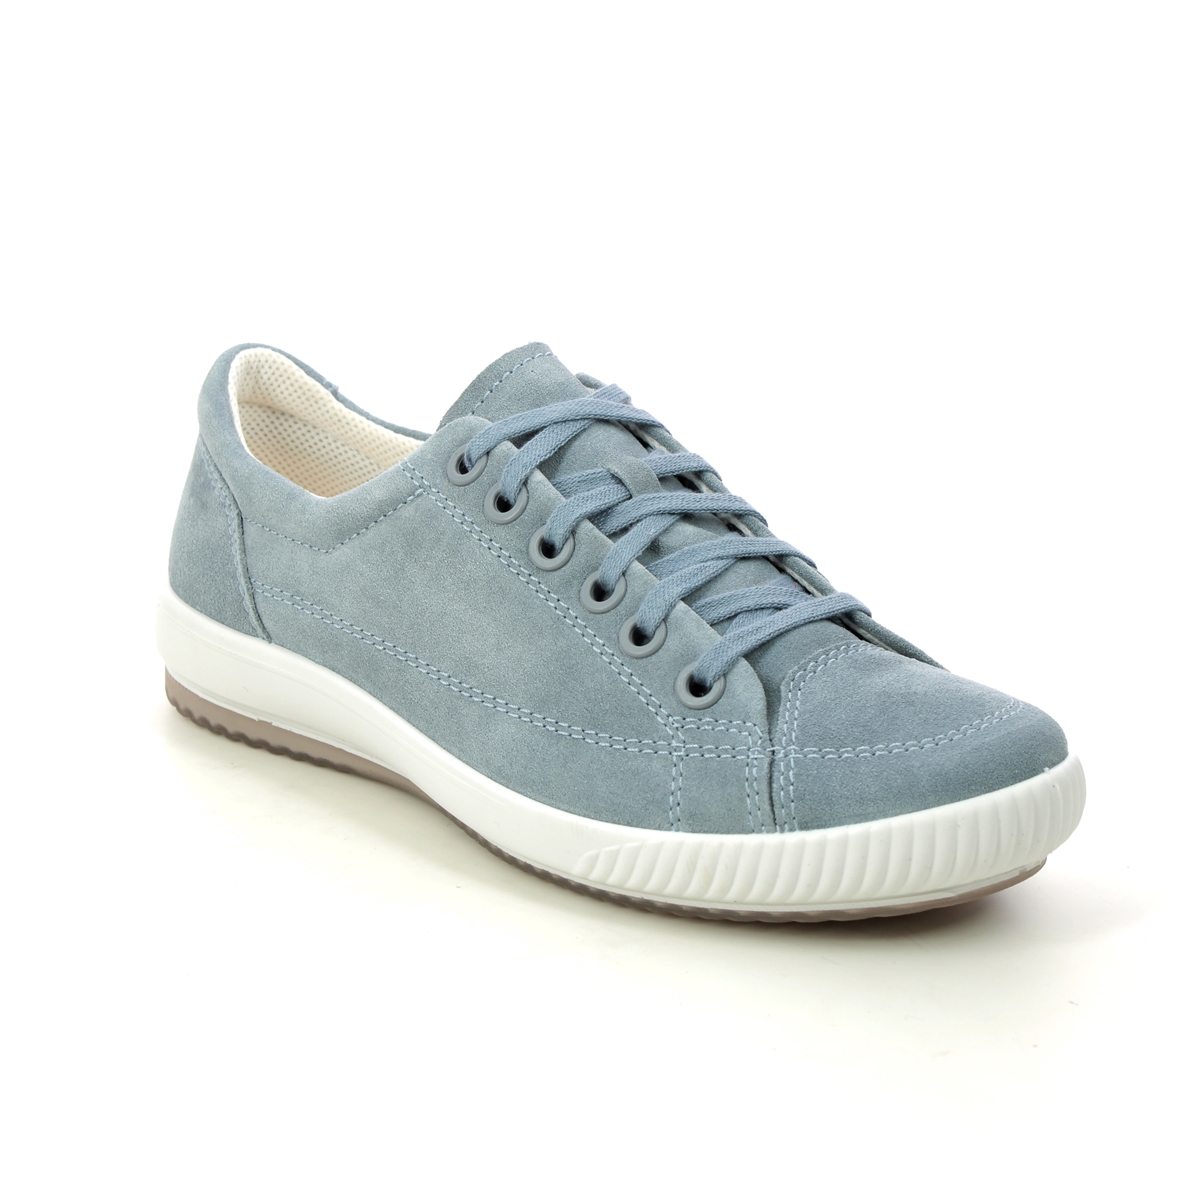 Legero Tanaro 5 Stitch Blue Grey Womens Lacing Shoes 2000161-8500 In Size 5.5 In Plain Blue Grey